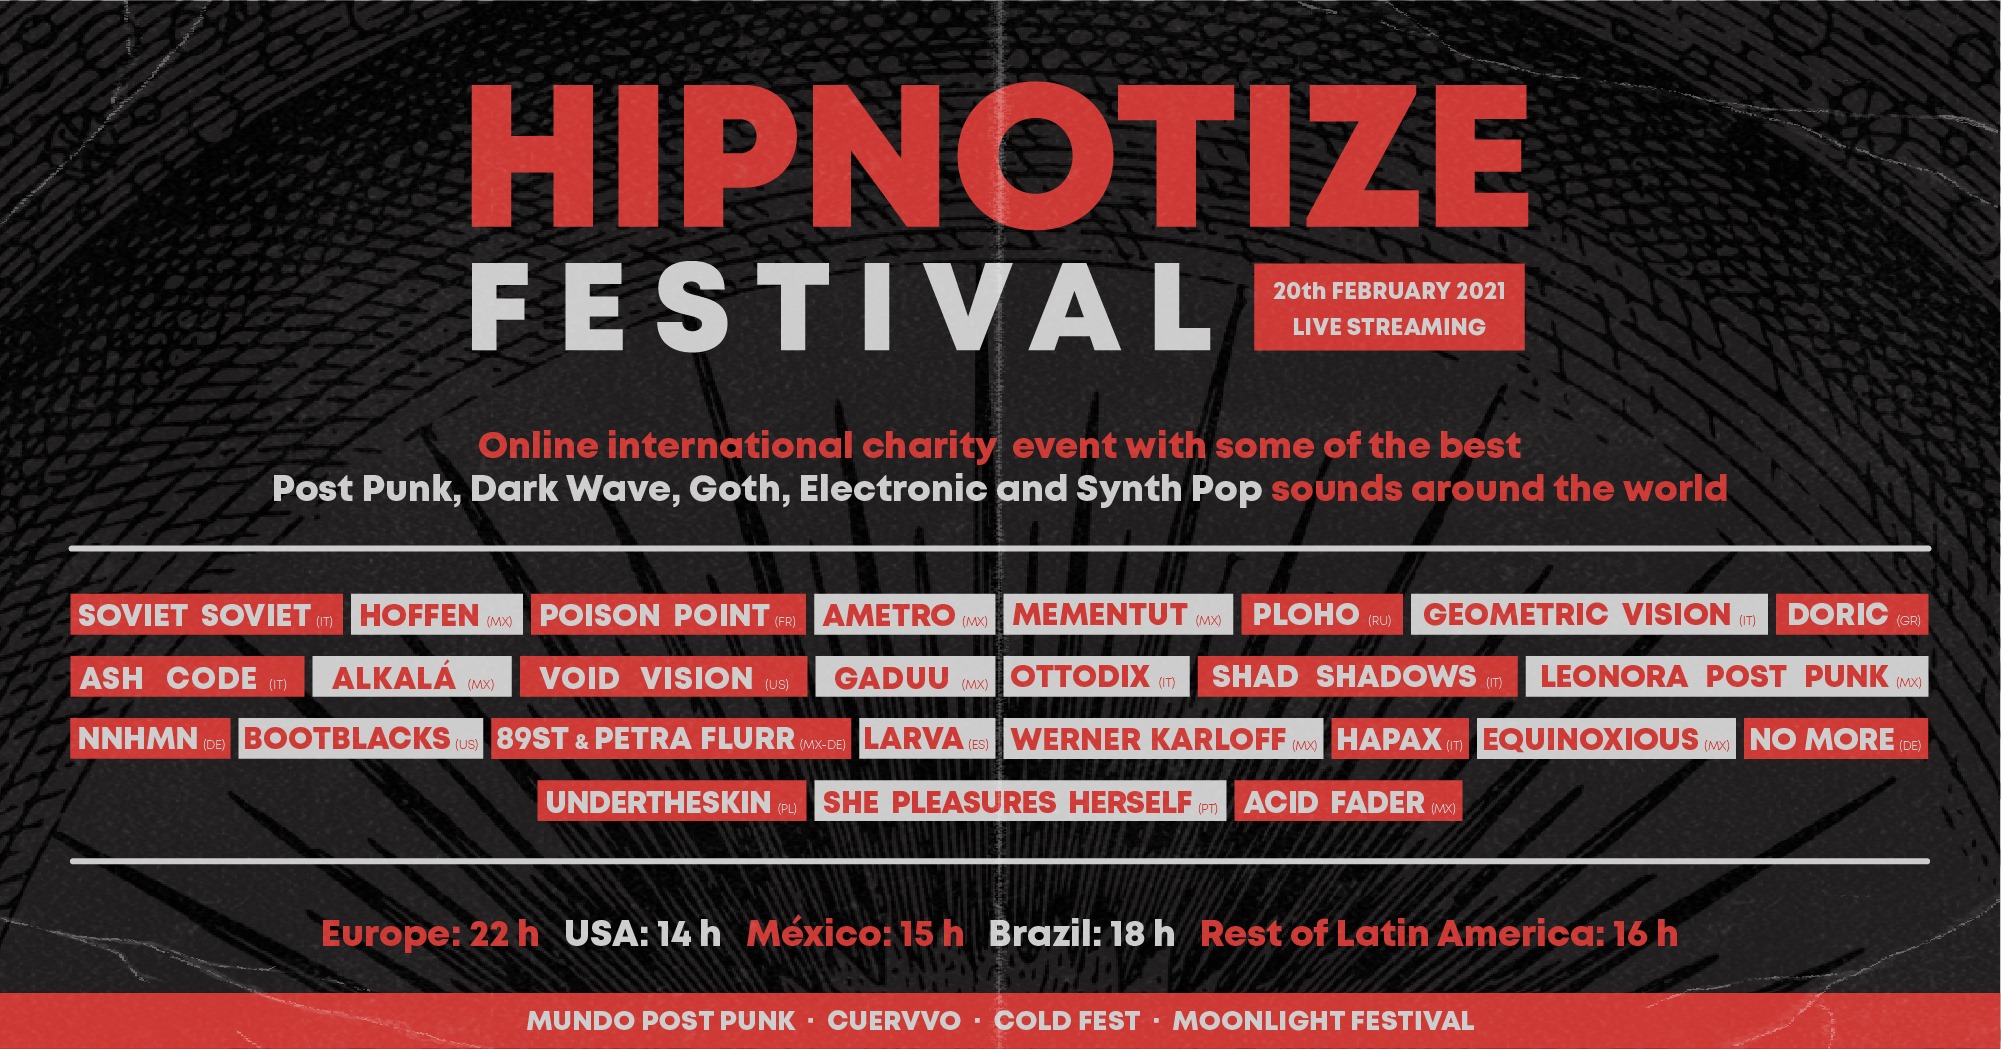 Hipnotize-Festival-2021